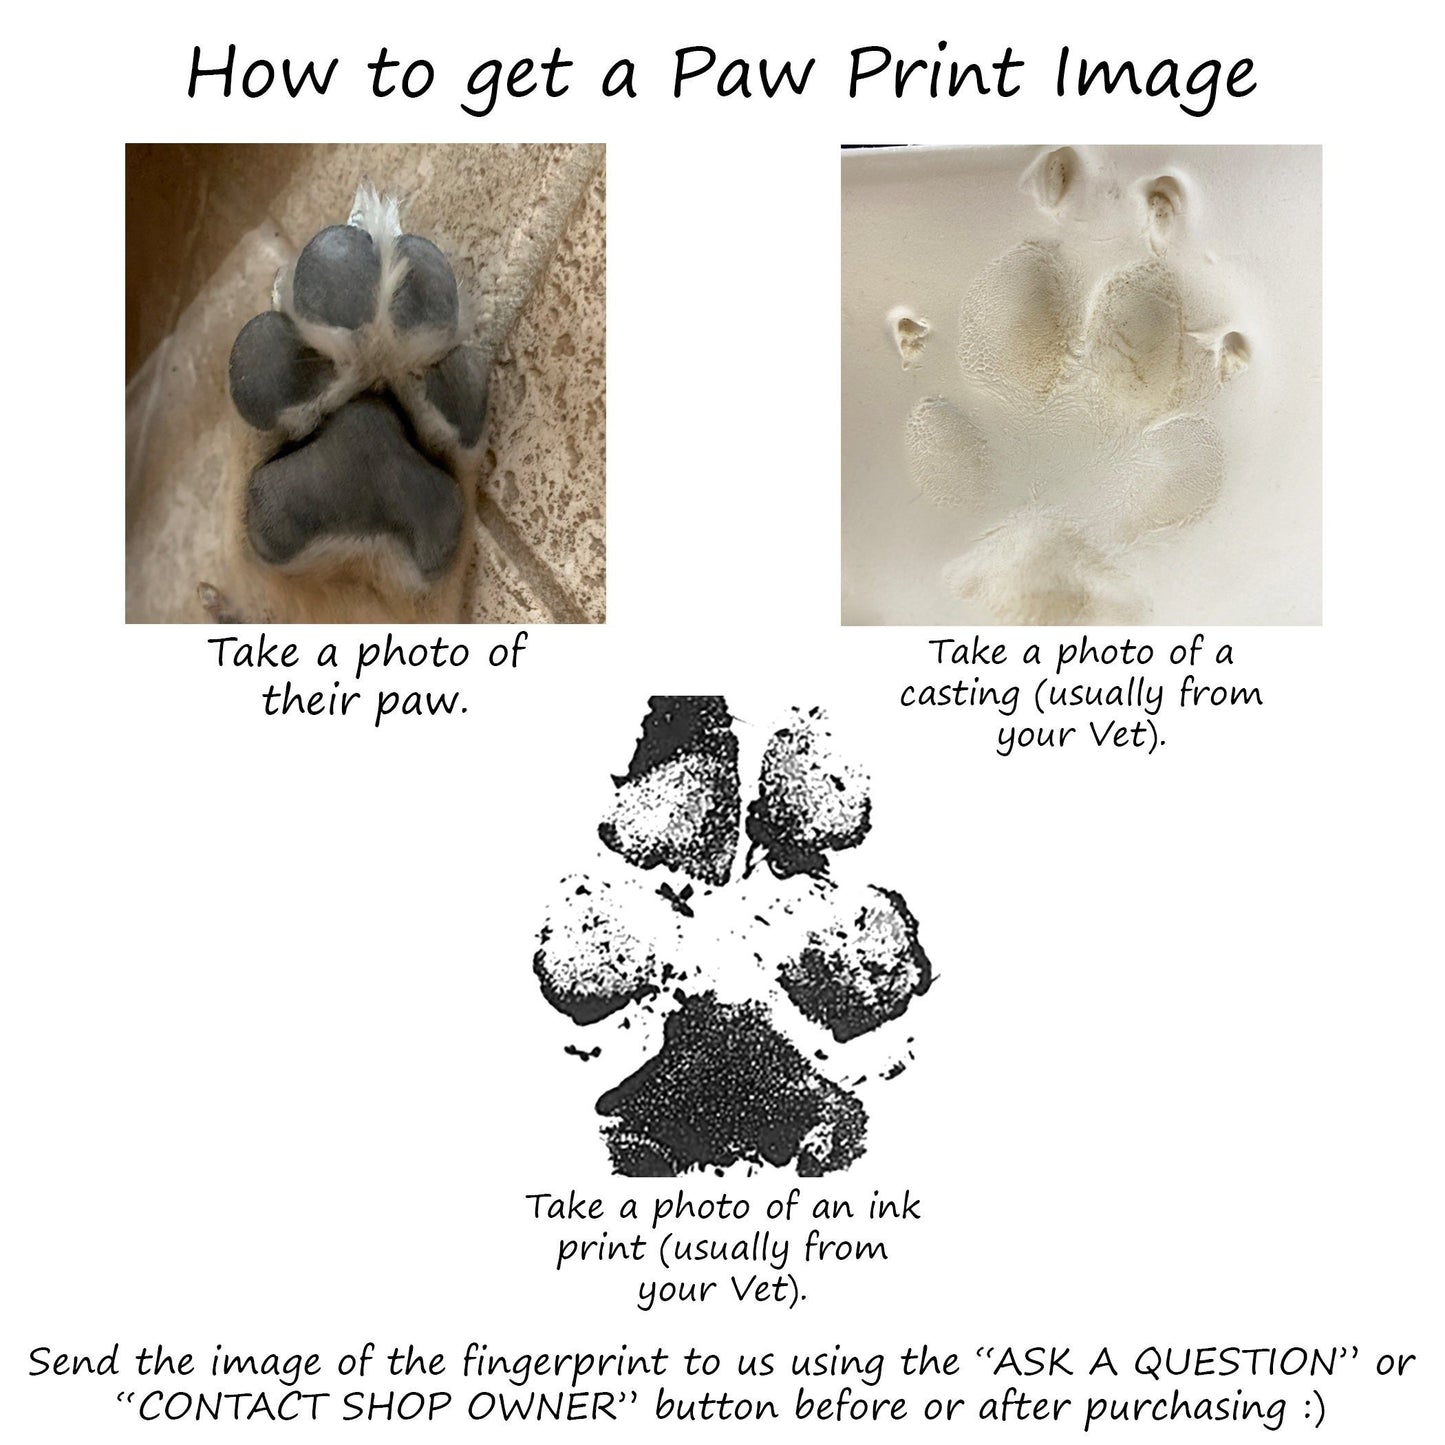 Pet Paw Print Necklace - Custom Engraving